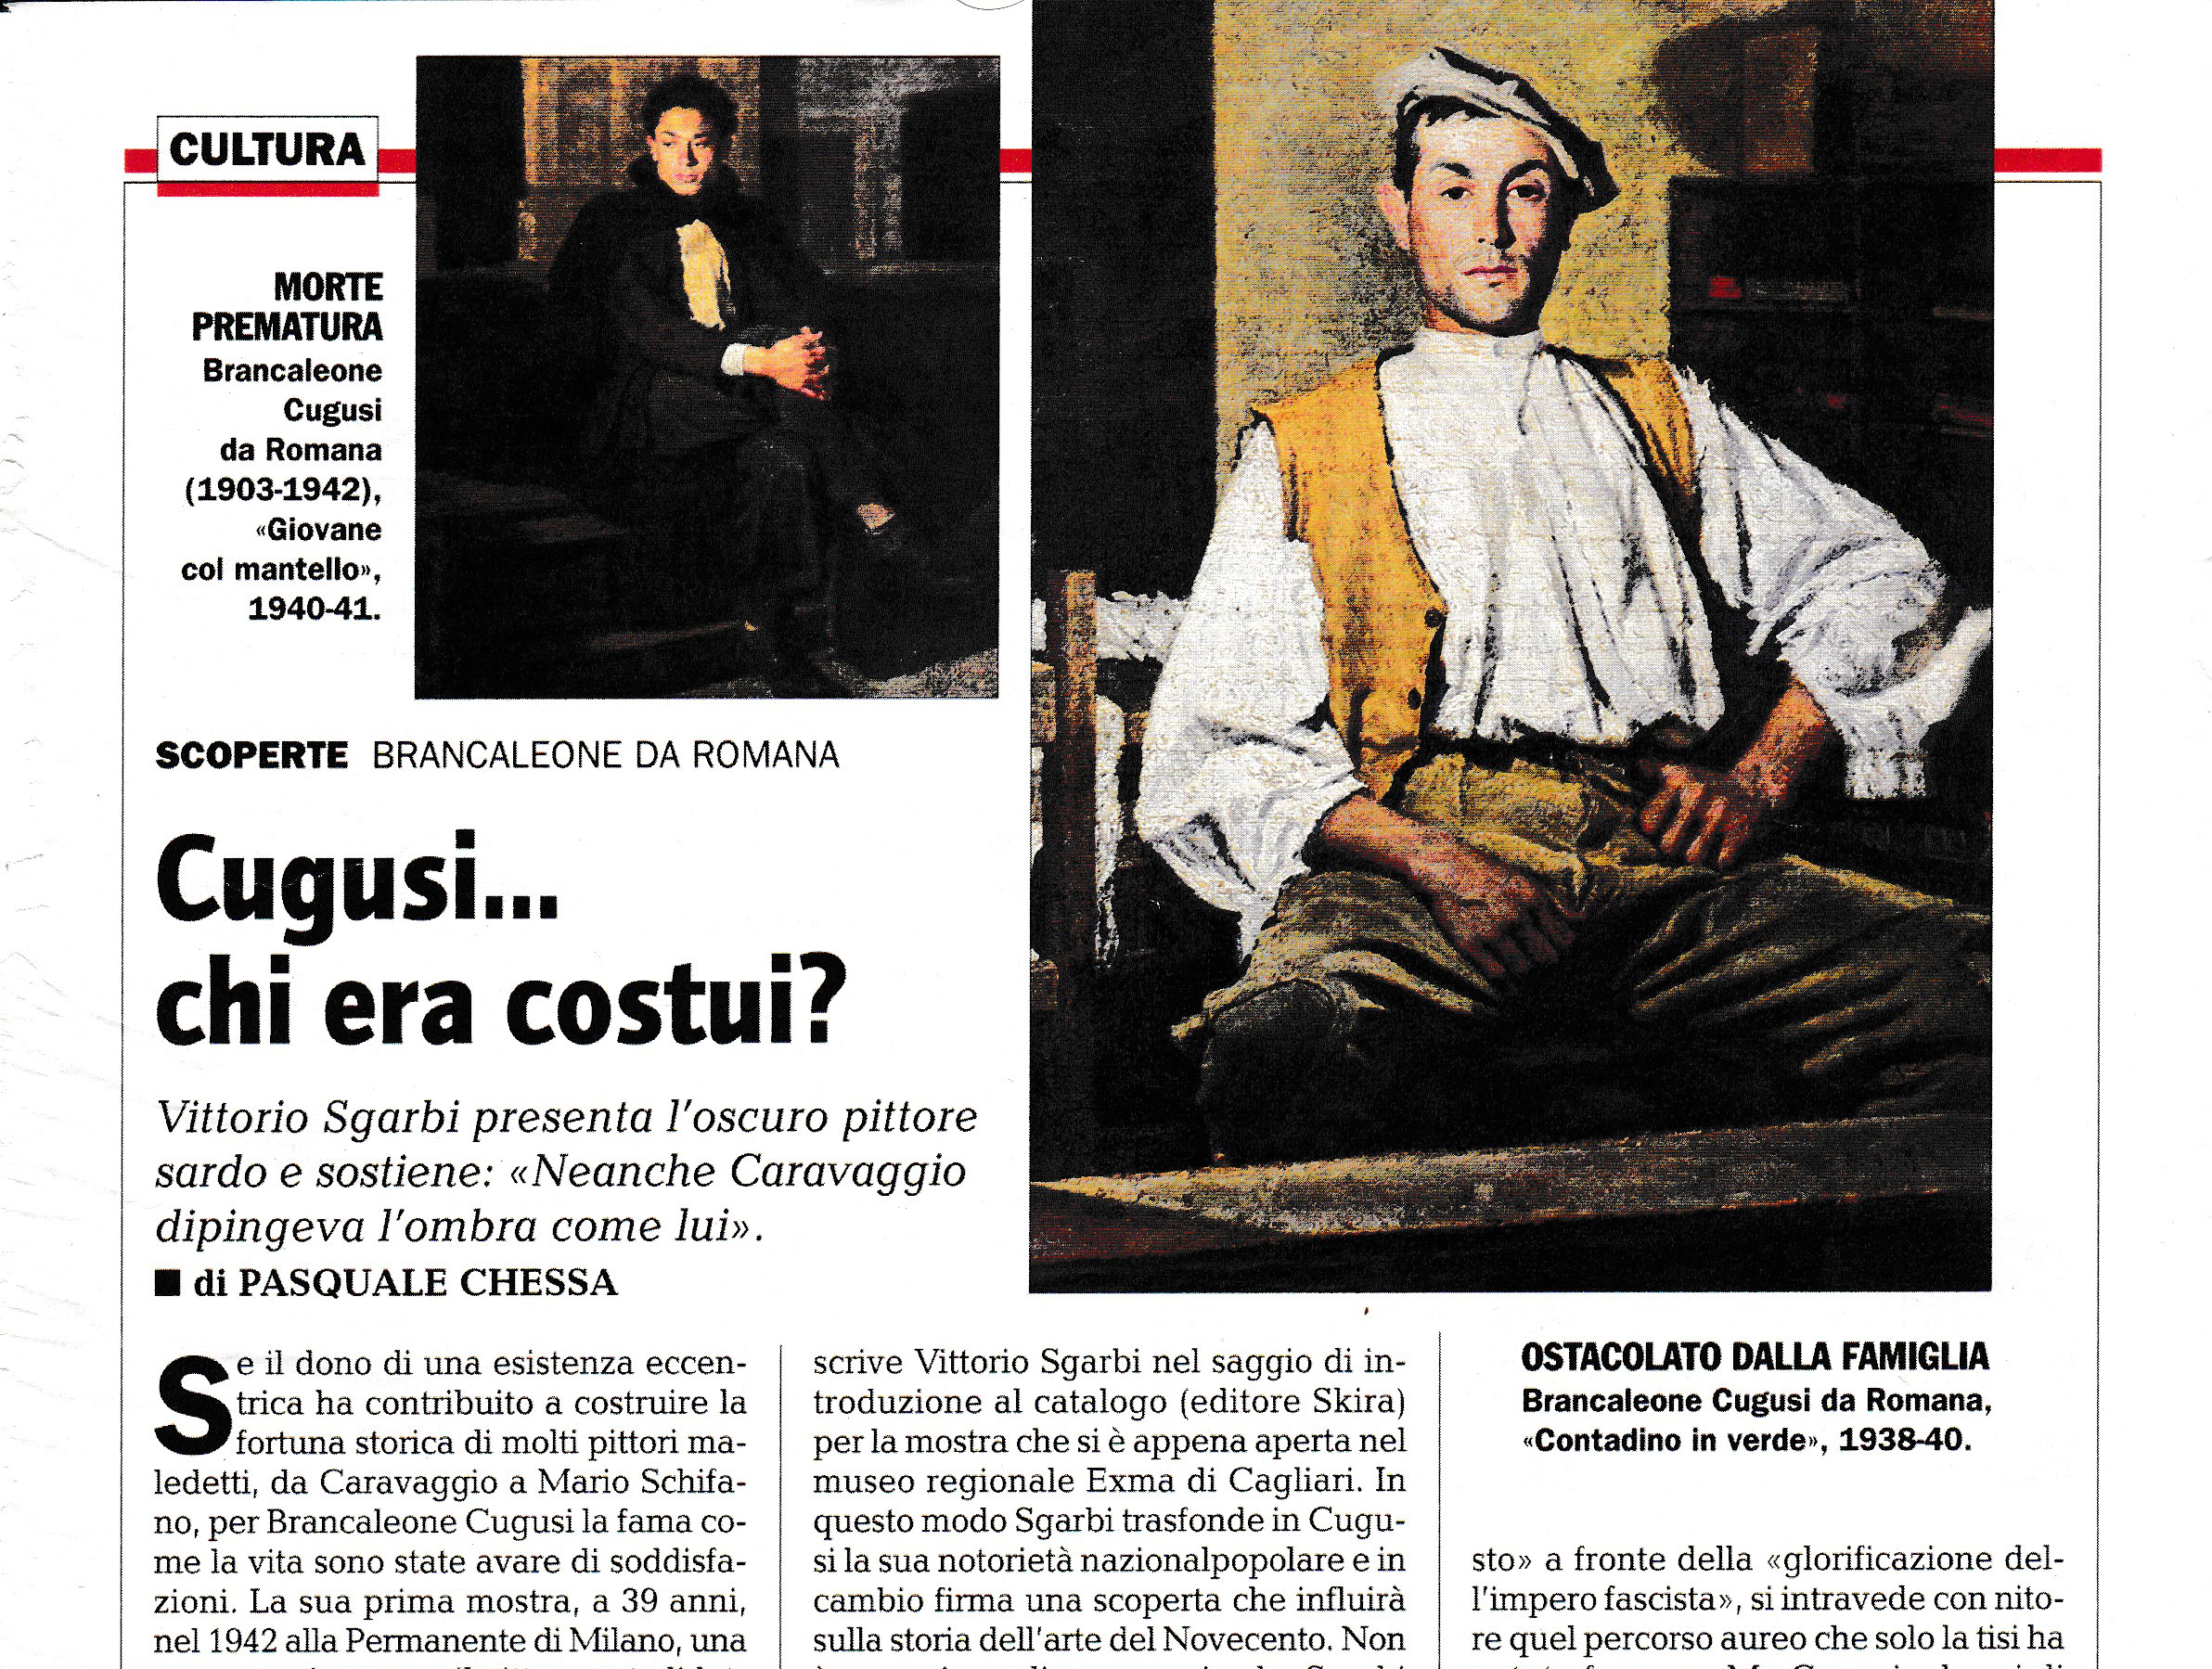 Panorama: Brancaleone da Romana, "neither Caravaggio painted the shadow as he did."